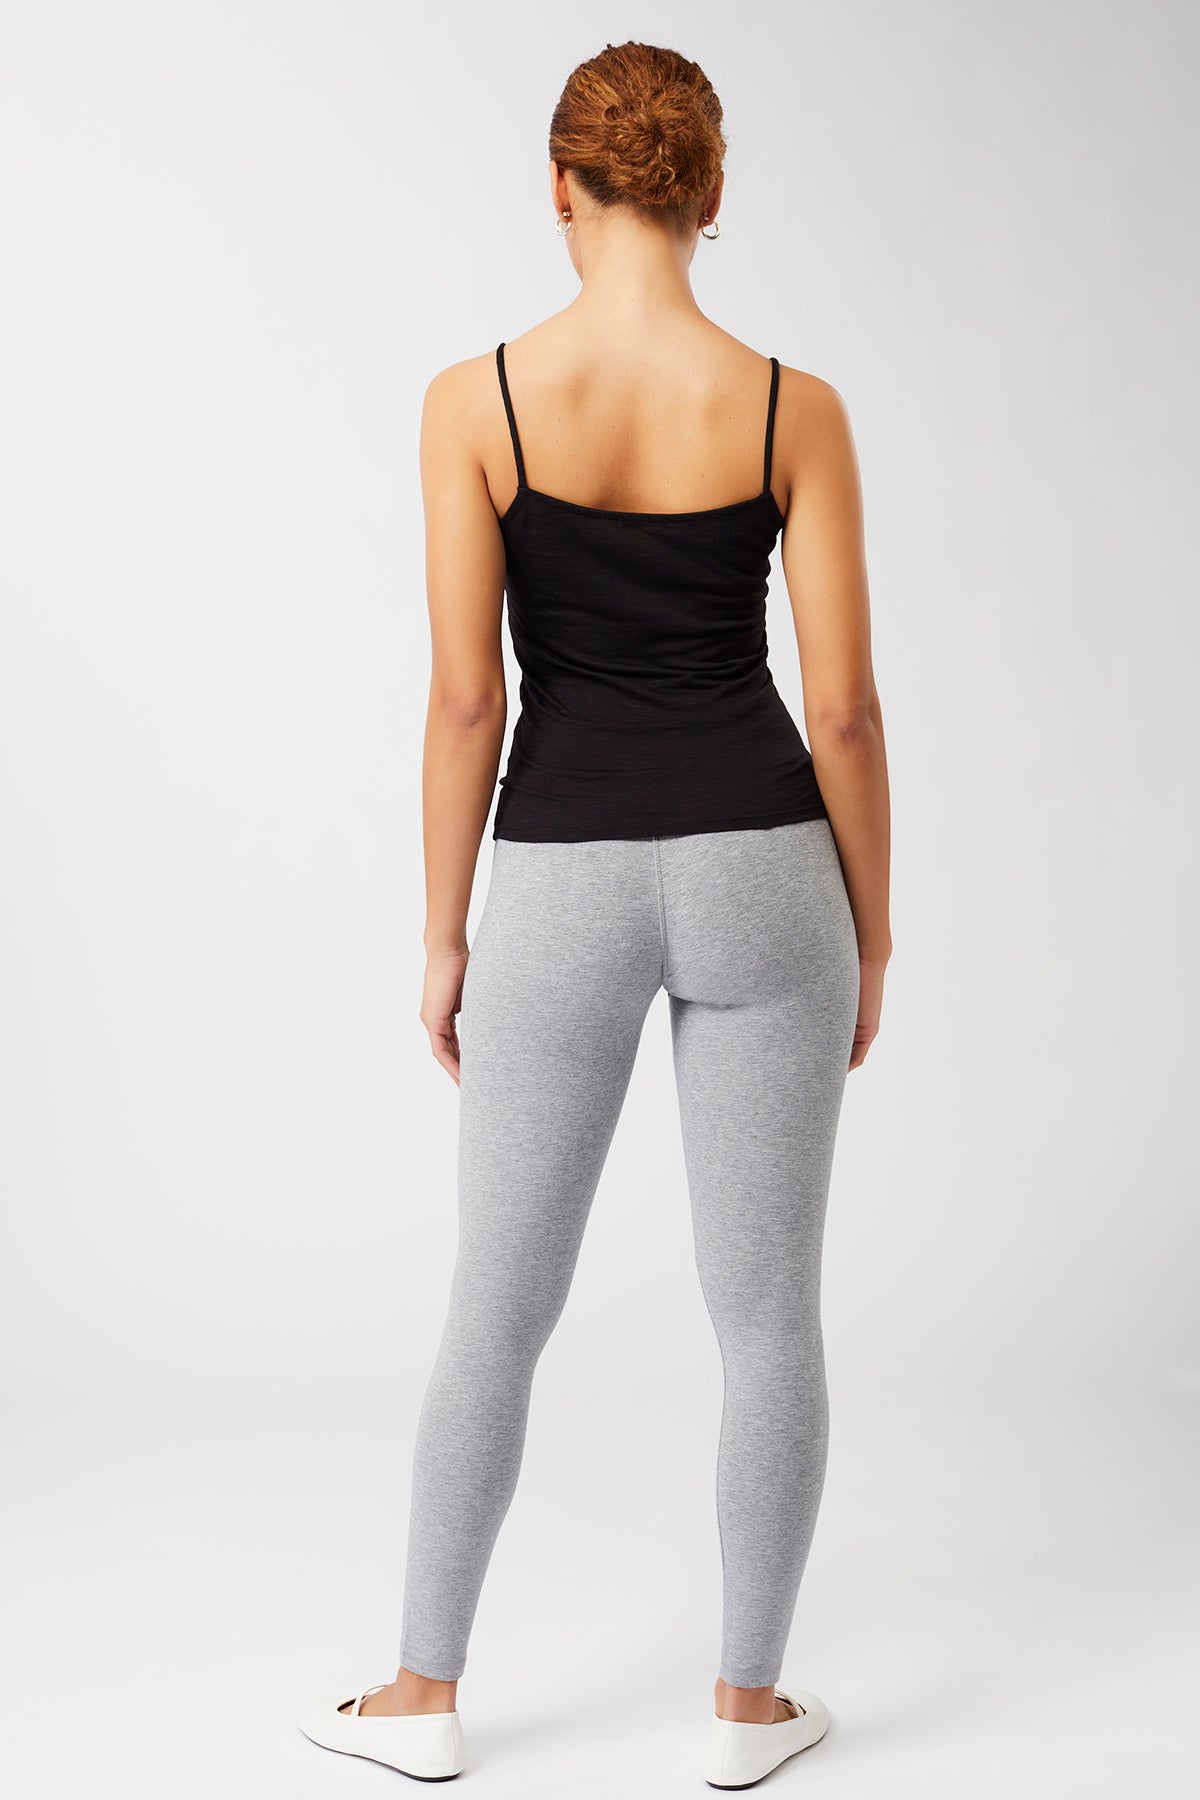 Mandala Yoga Top Schwarz Outfit Rückseite - Holly Top